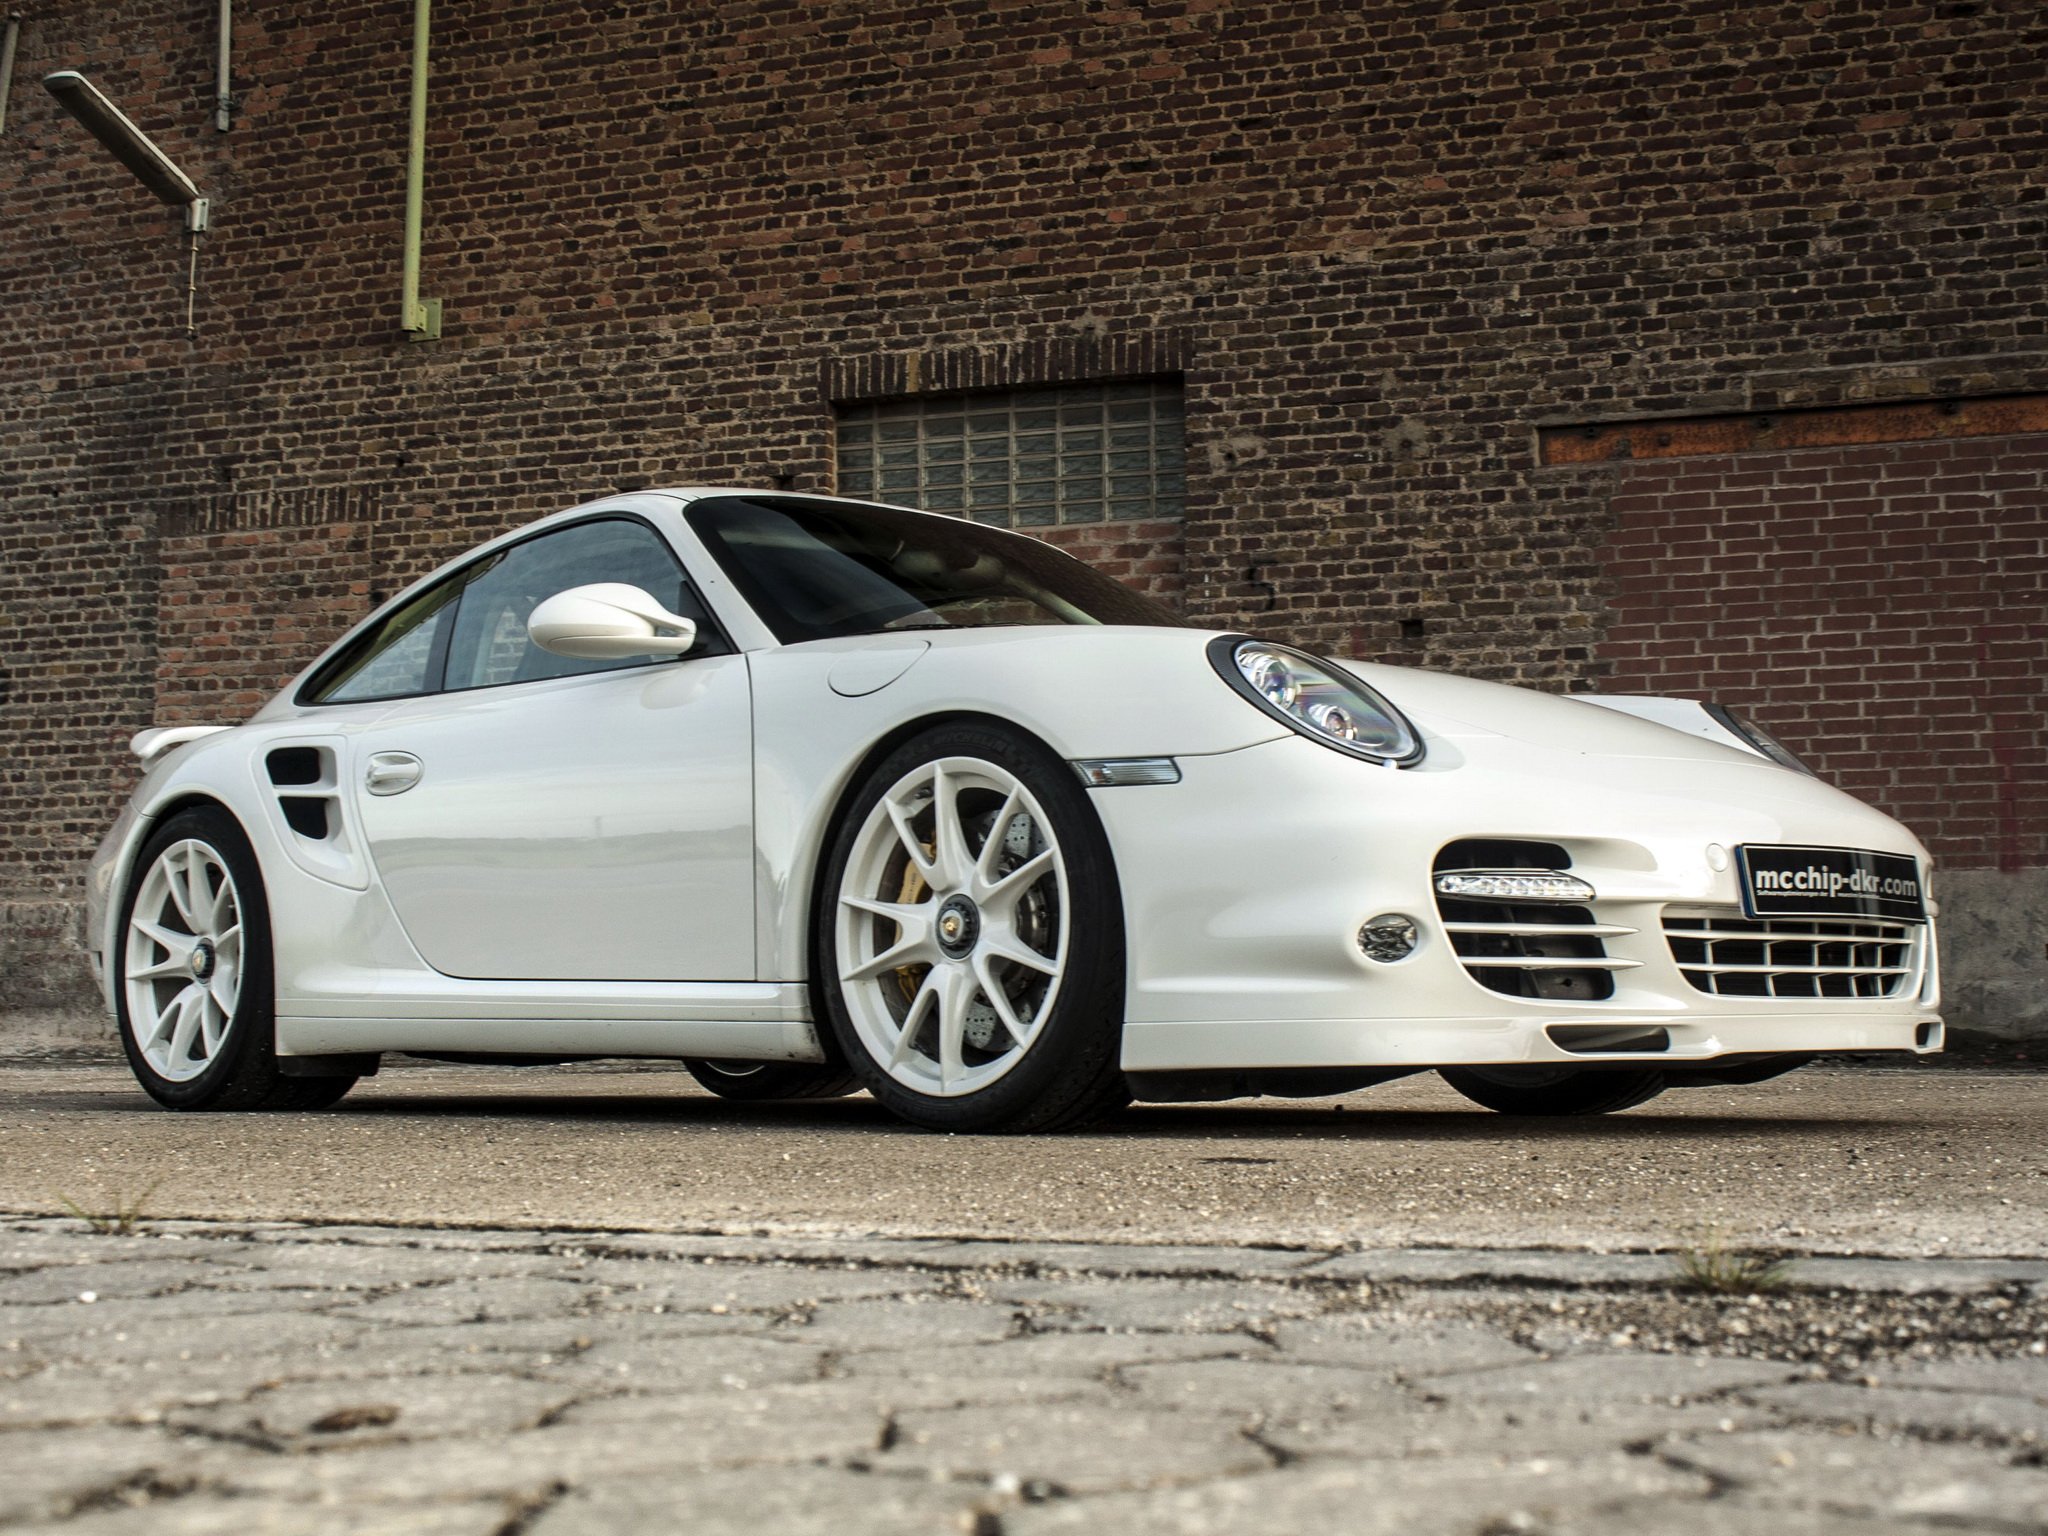 2013, Mcchip dkr, Porsche, 911, Turbo, S,  997 , Supercar, Tuning Wallpaper